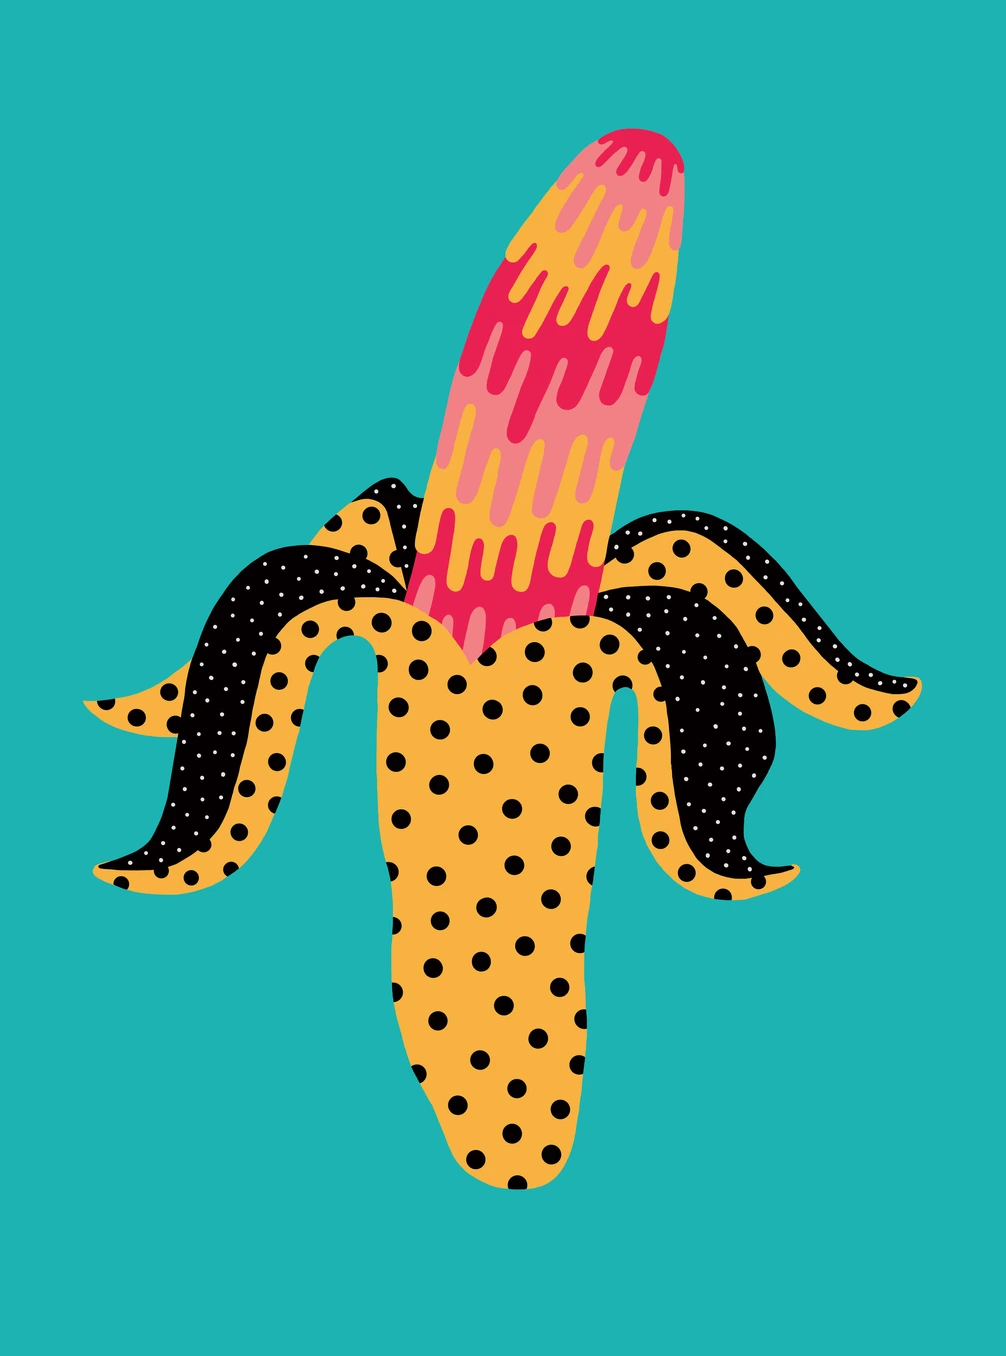 Illustration of a colorful banana